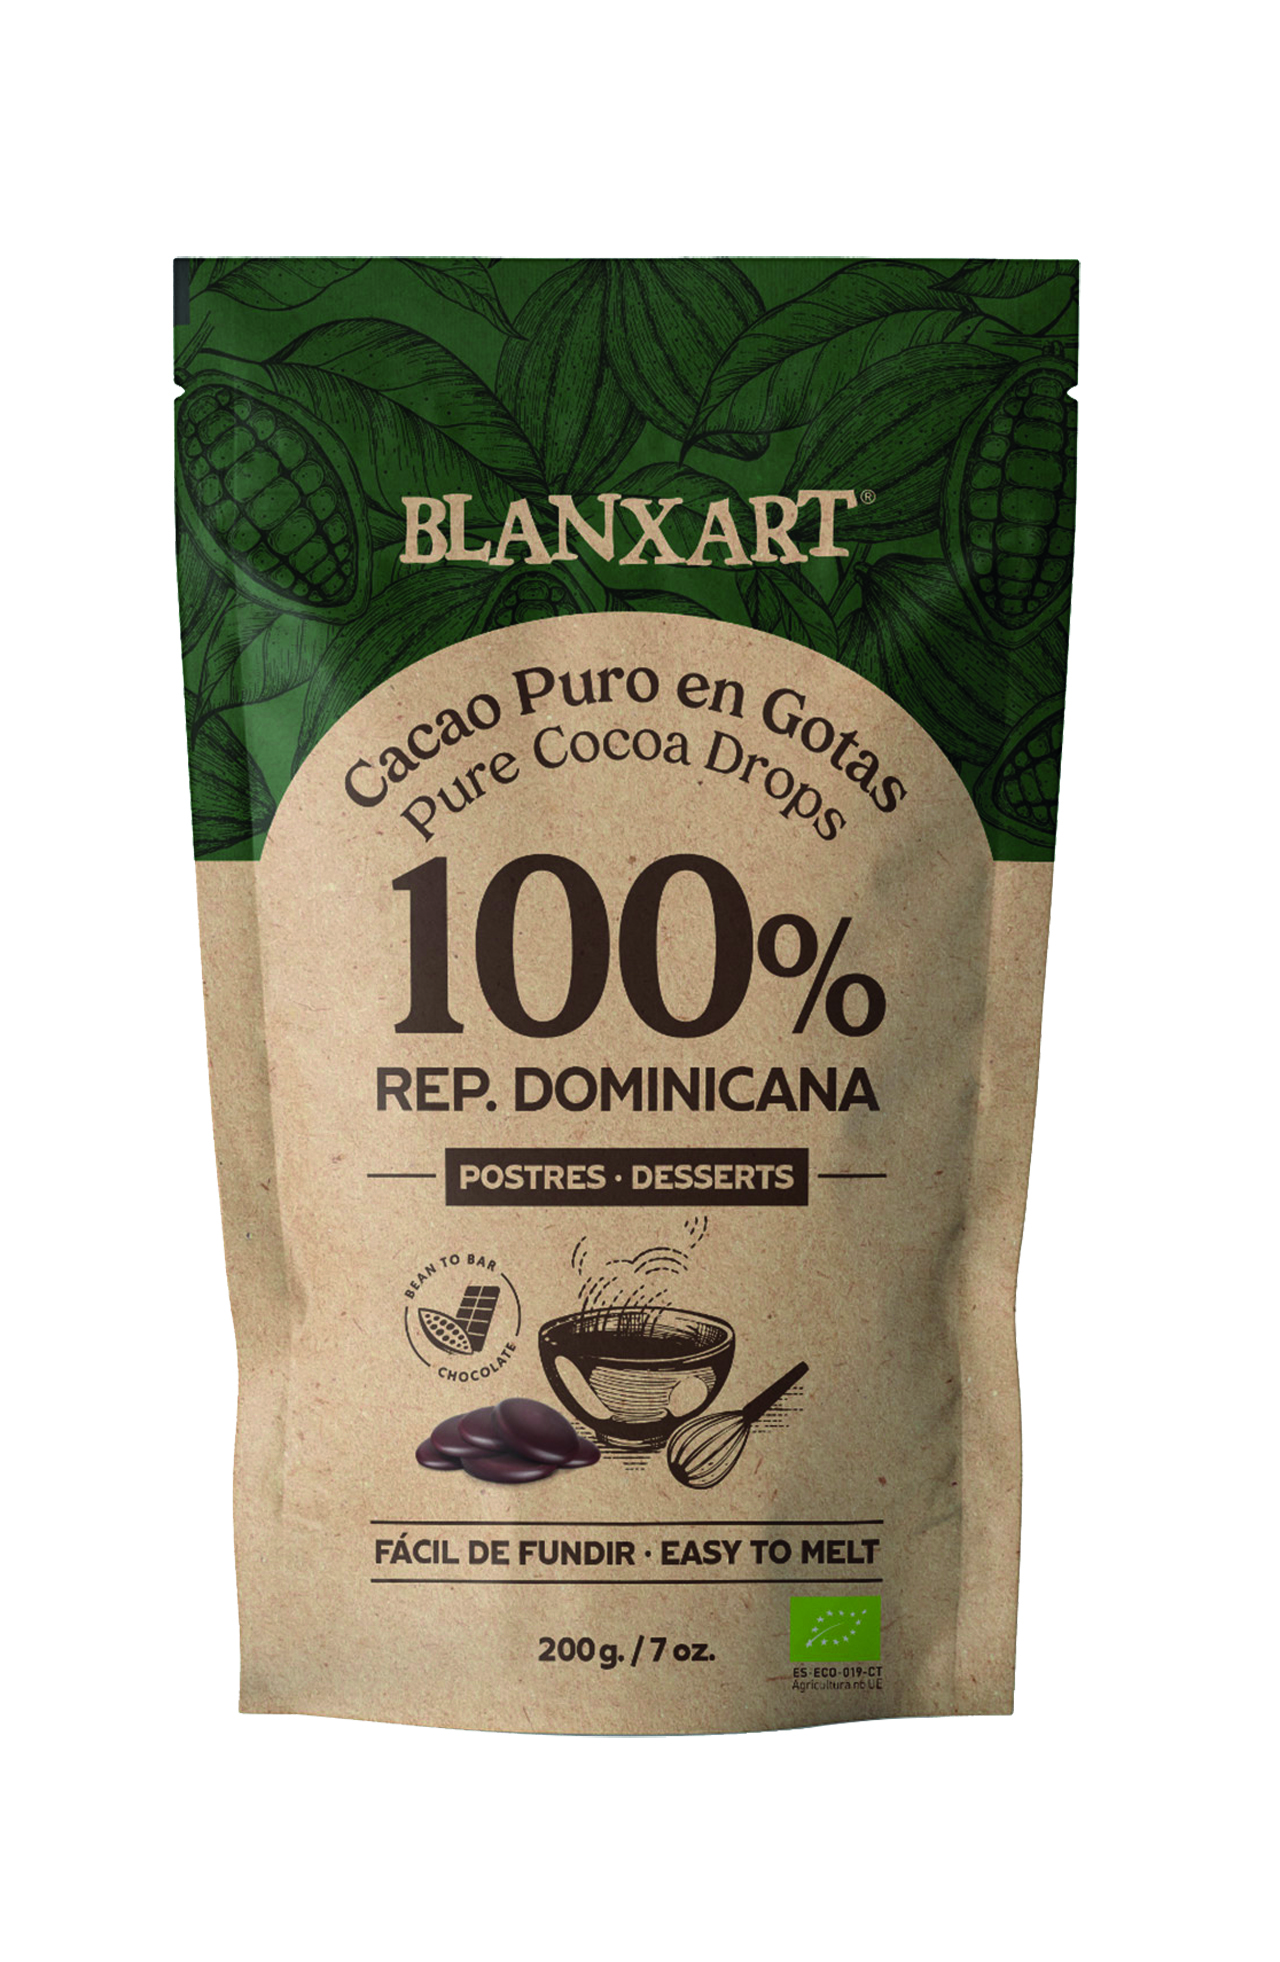 BLANXART | Schokoladendrops »Rep. Dominicana« Cacao Puro 100% | 200g